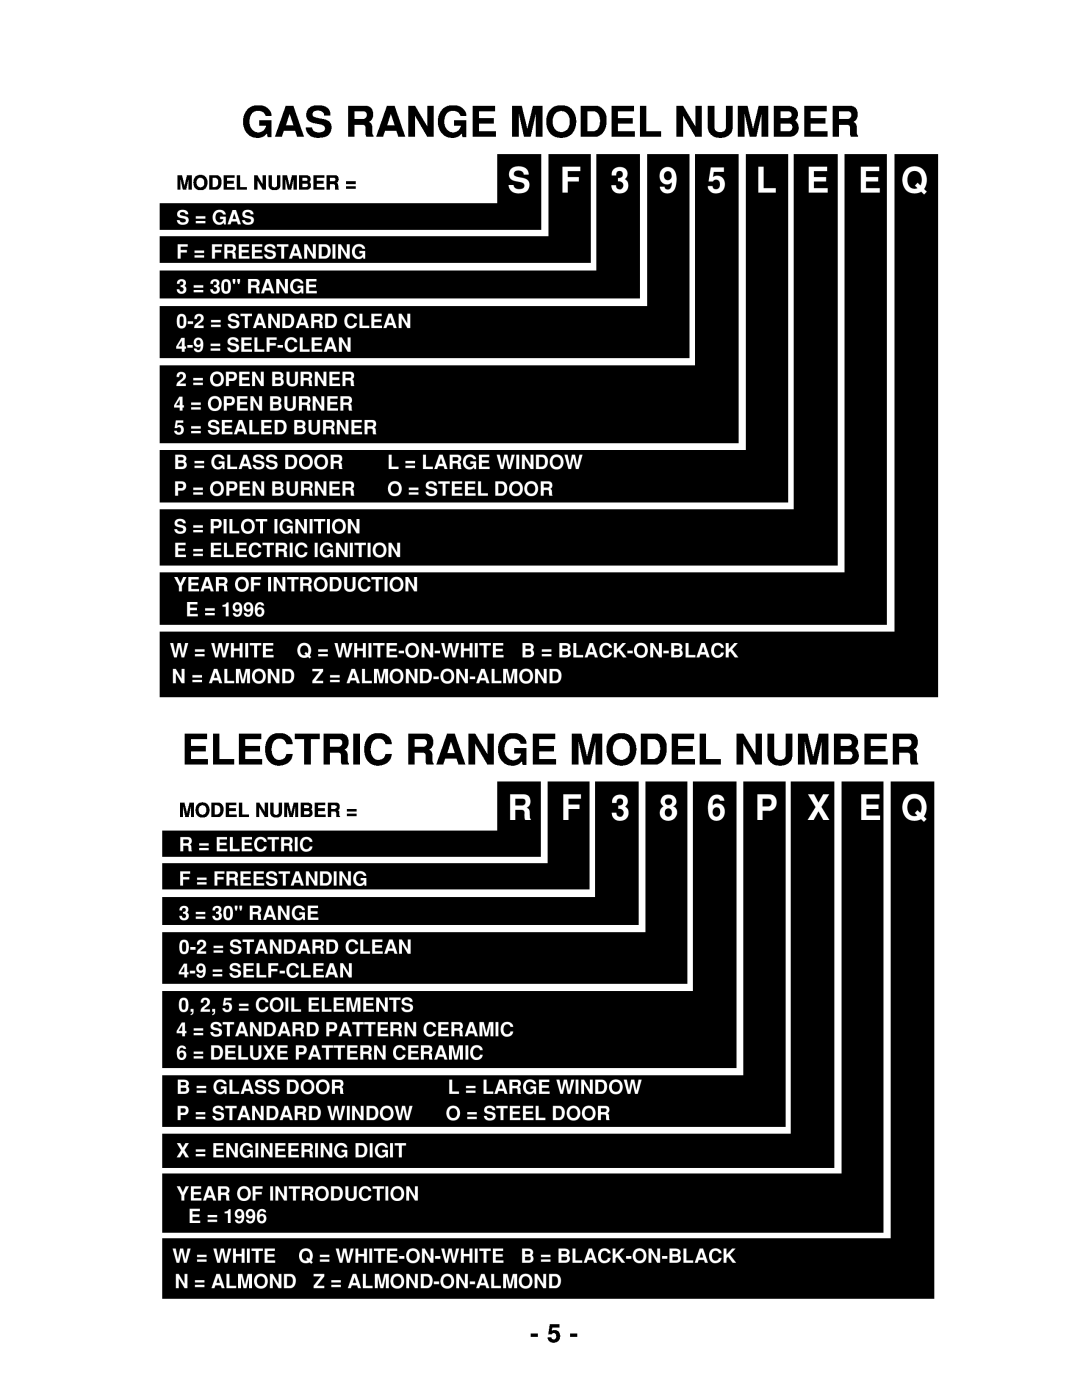 Whirlpool 465 manual Gas Range Model Number, Electric Range Model Number, S F 3 9 5 L E E Q, R F 3 8 6 P X E Q 